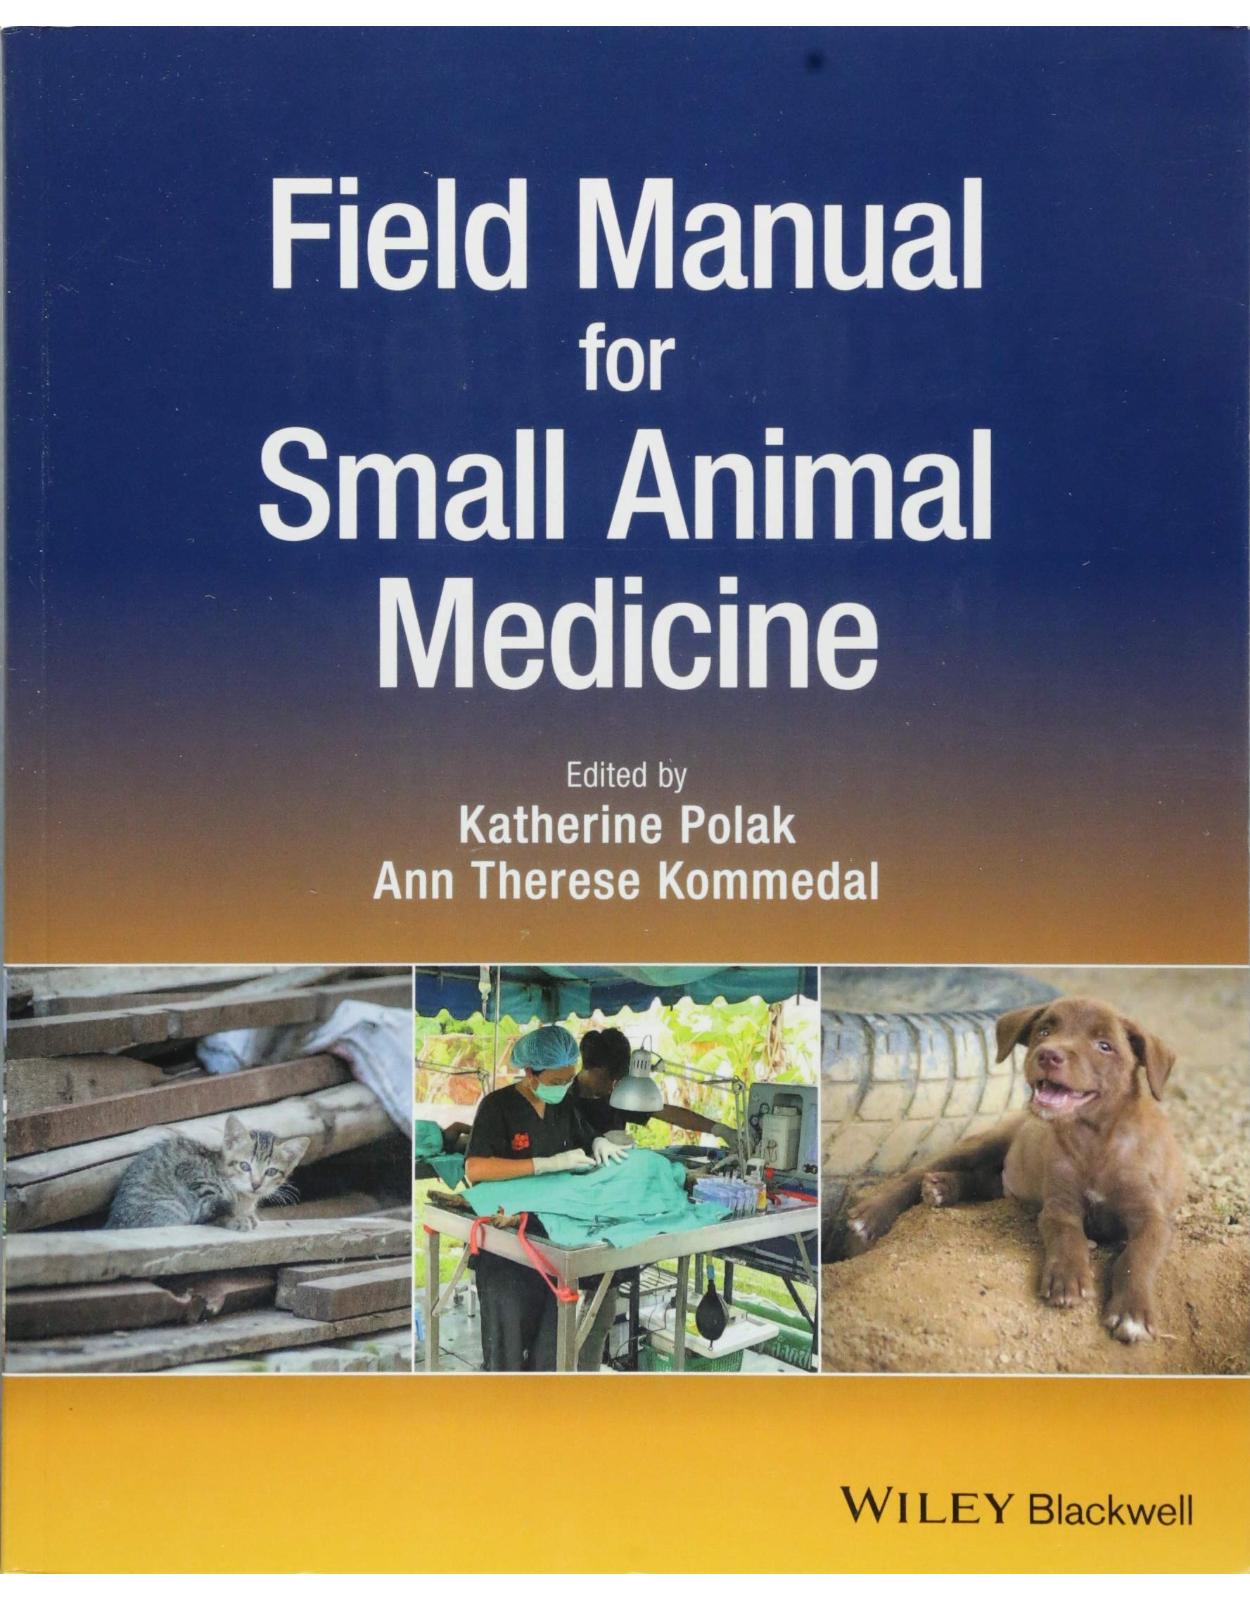 Field Manual for Small Animal Medicine